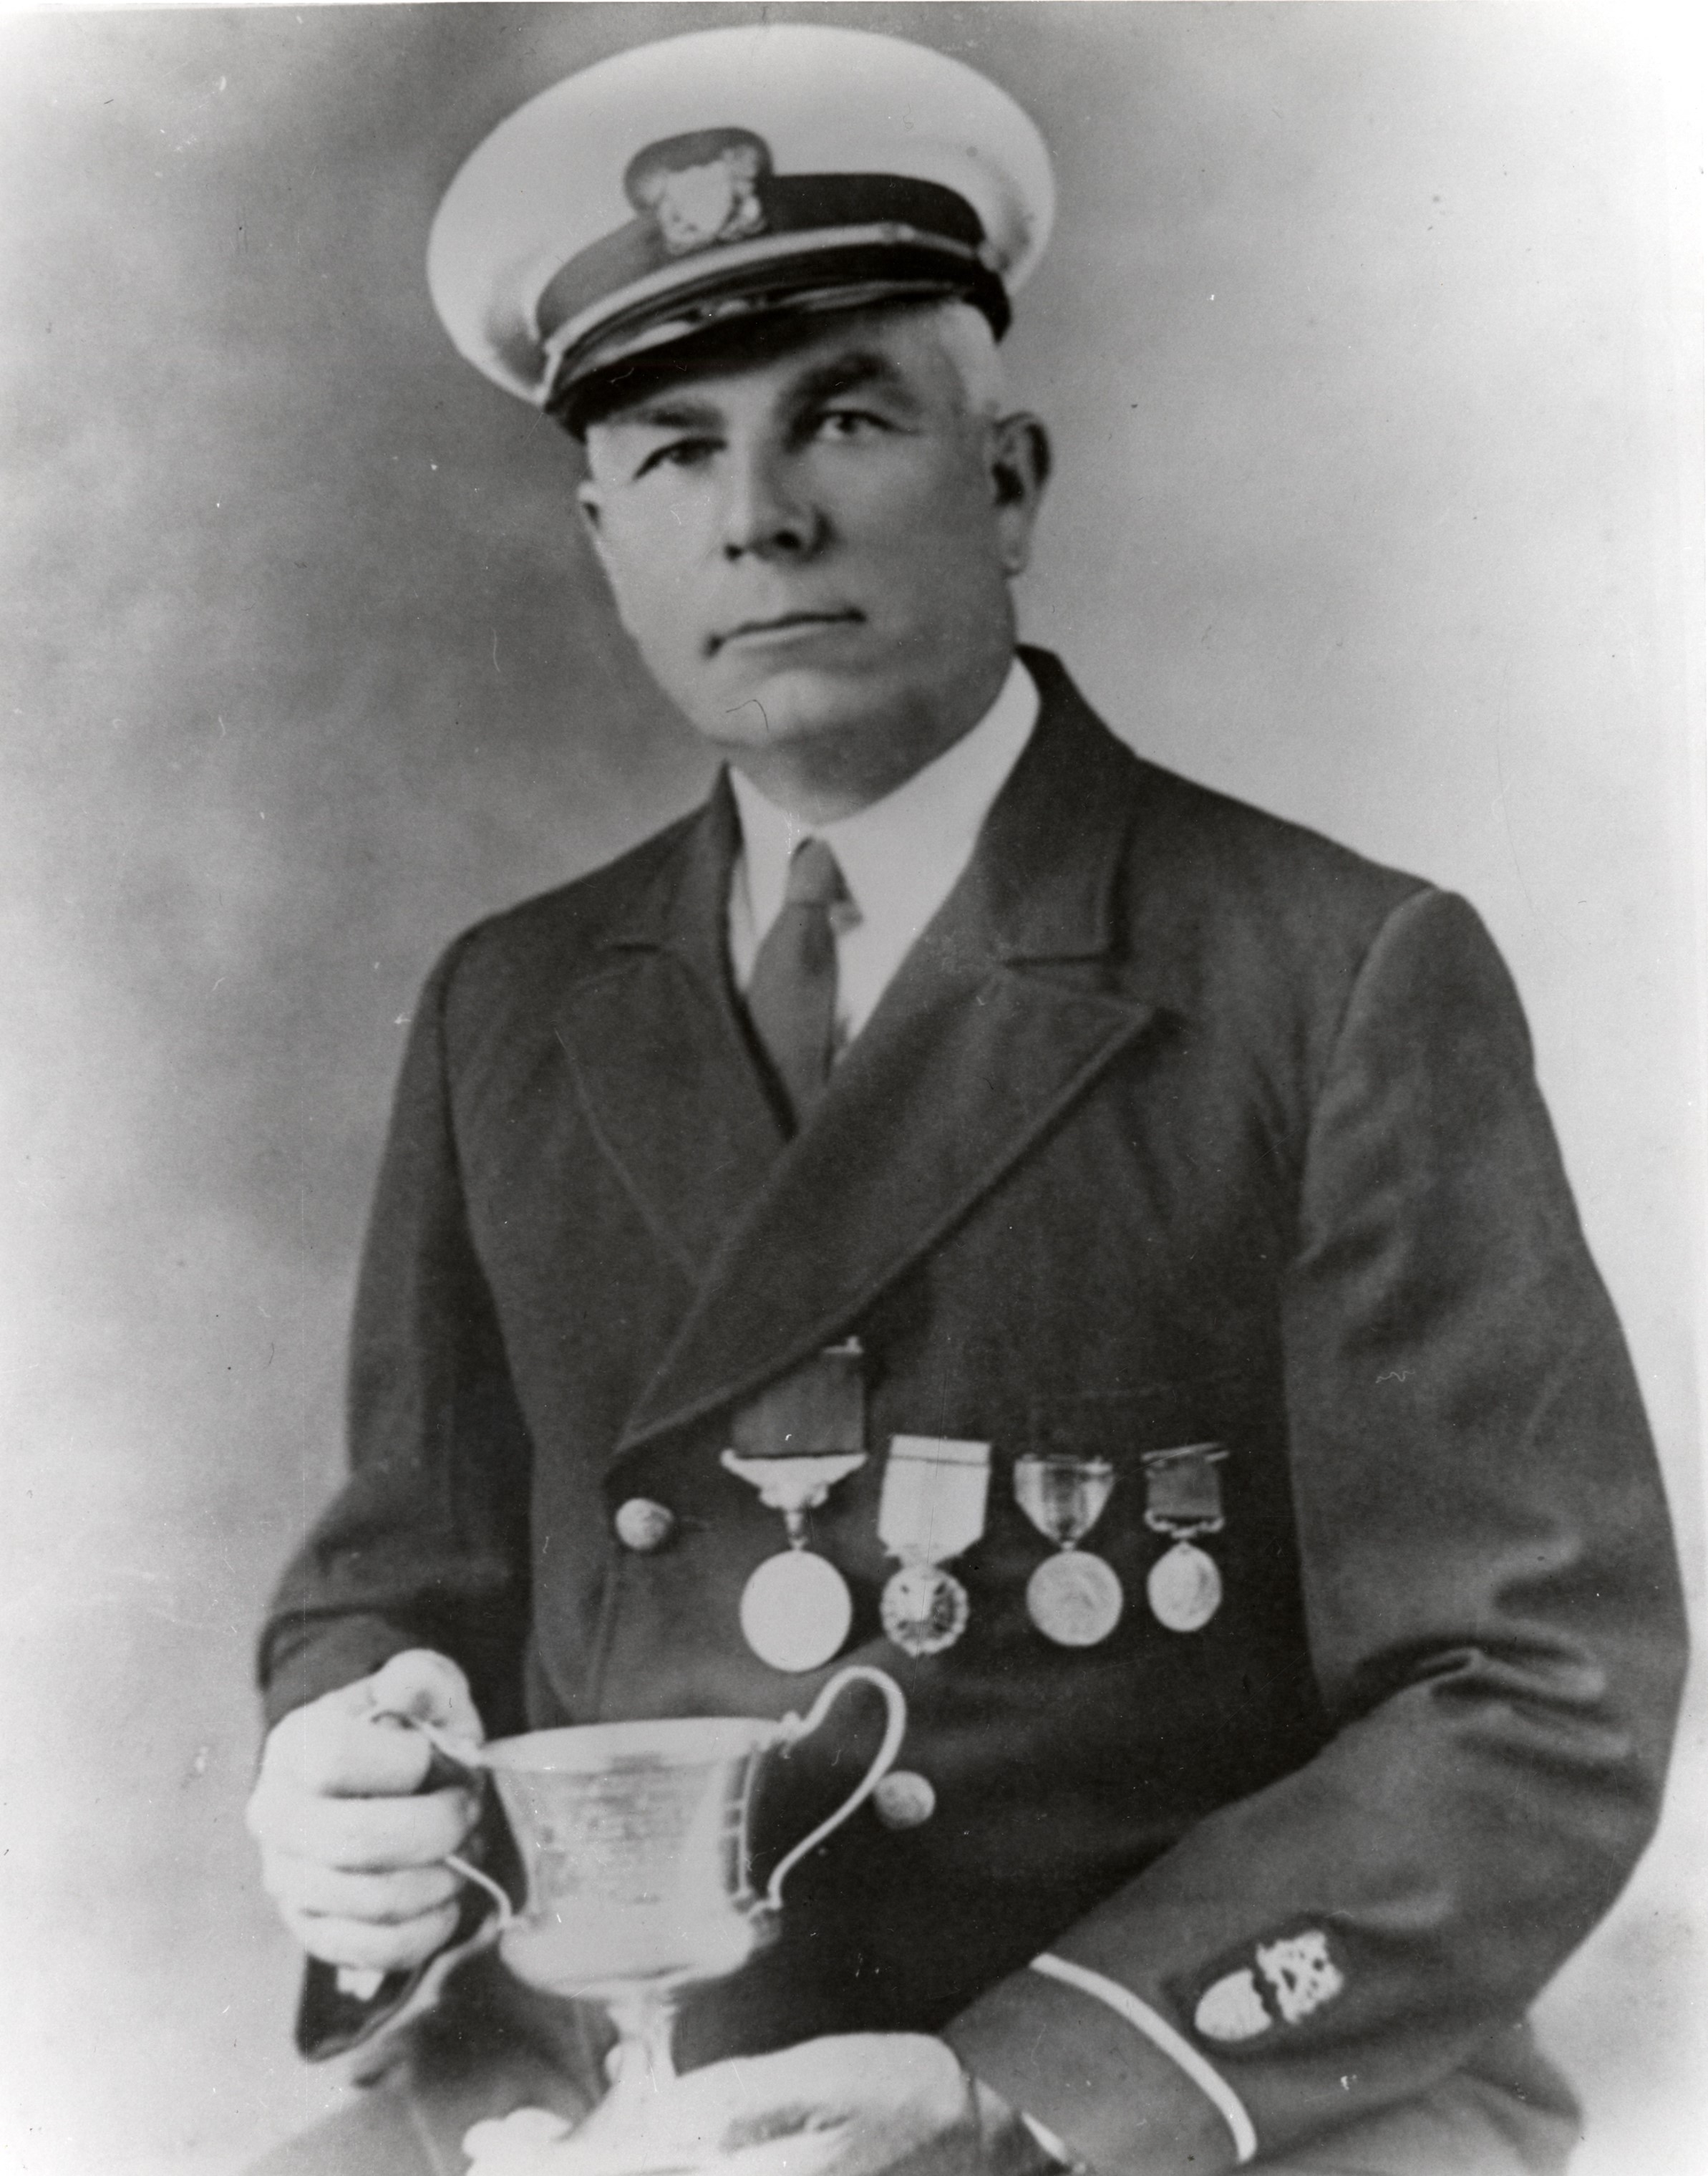 Chief John Allen Midgett in dress uniform adorned with his medals and awards. (U.S. Coast Guard)